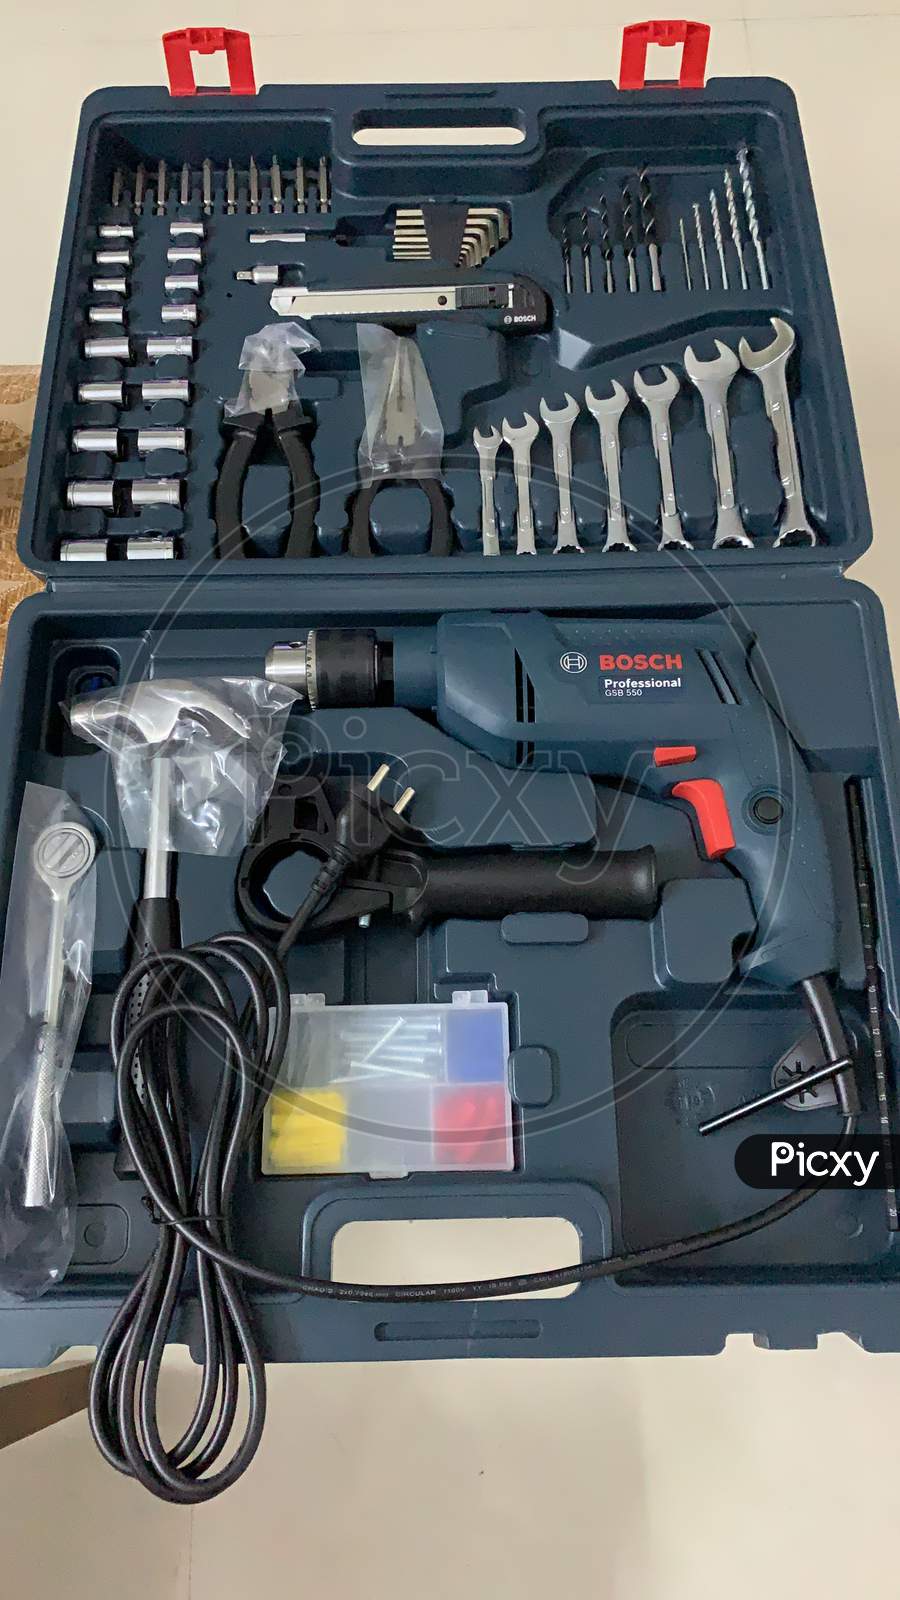 Professional tool kit